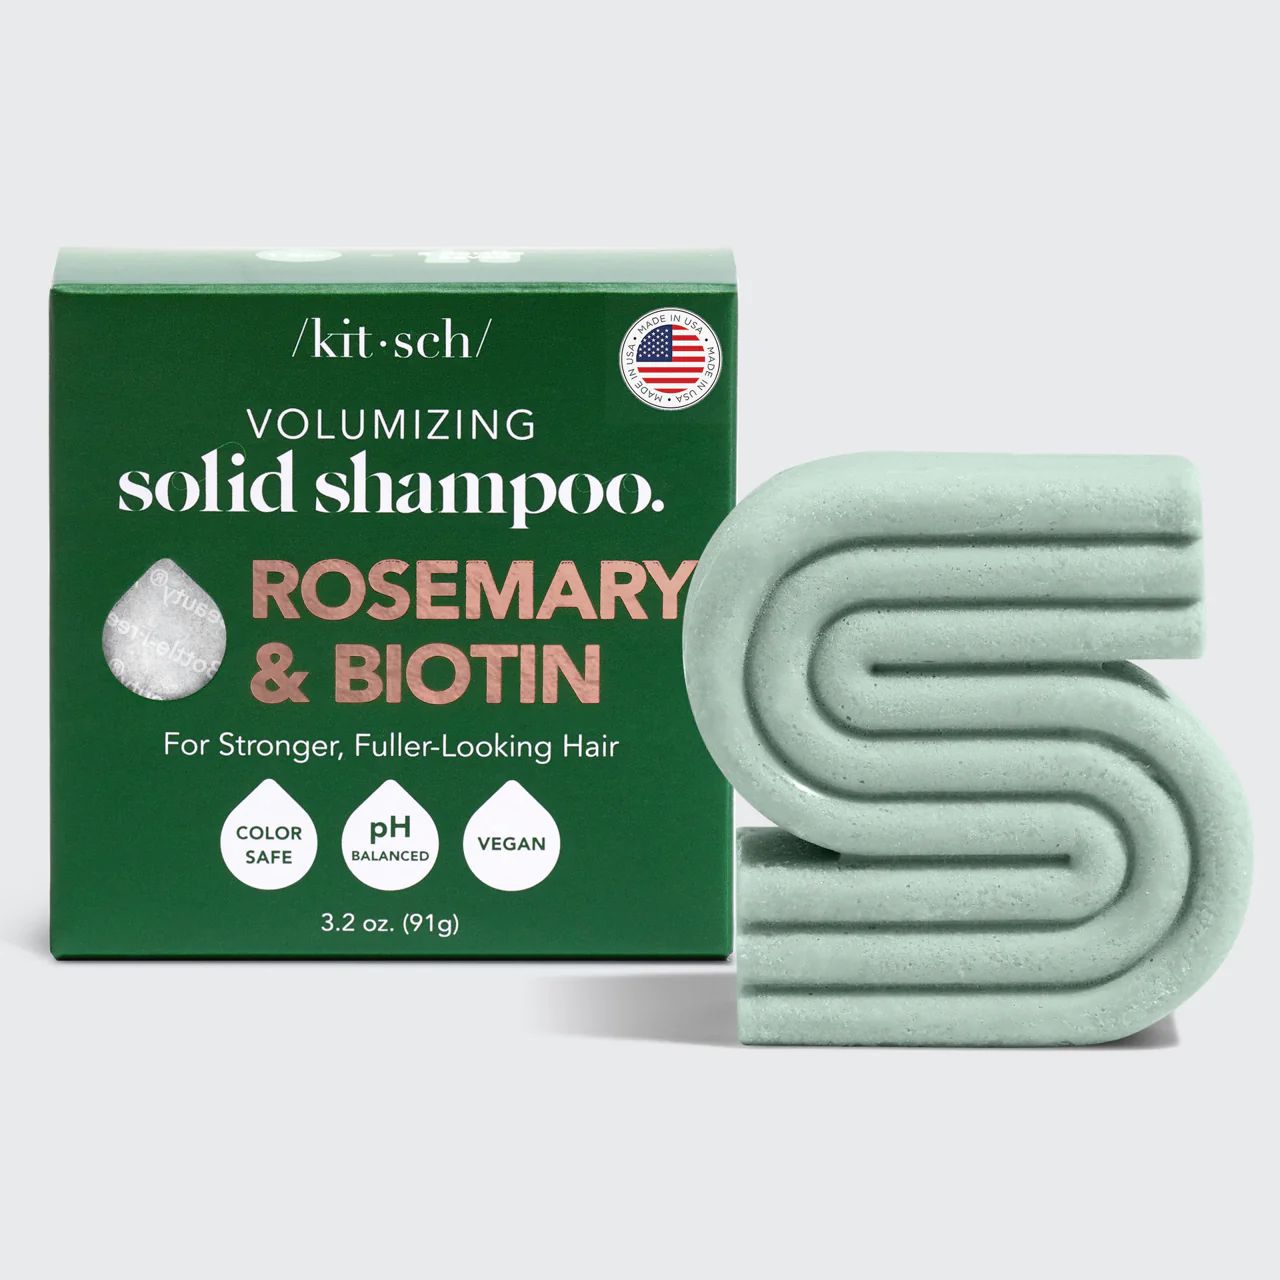 Rosemary & Biotin Volumizing Solid Shampoo | Kitsch